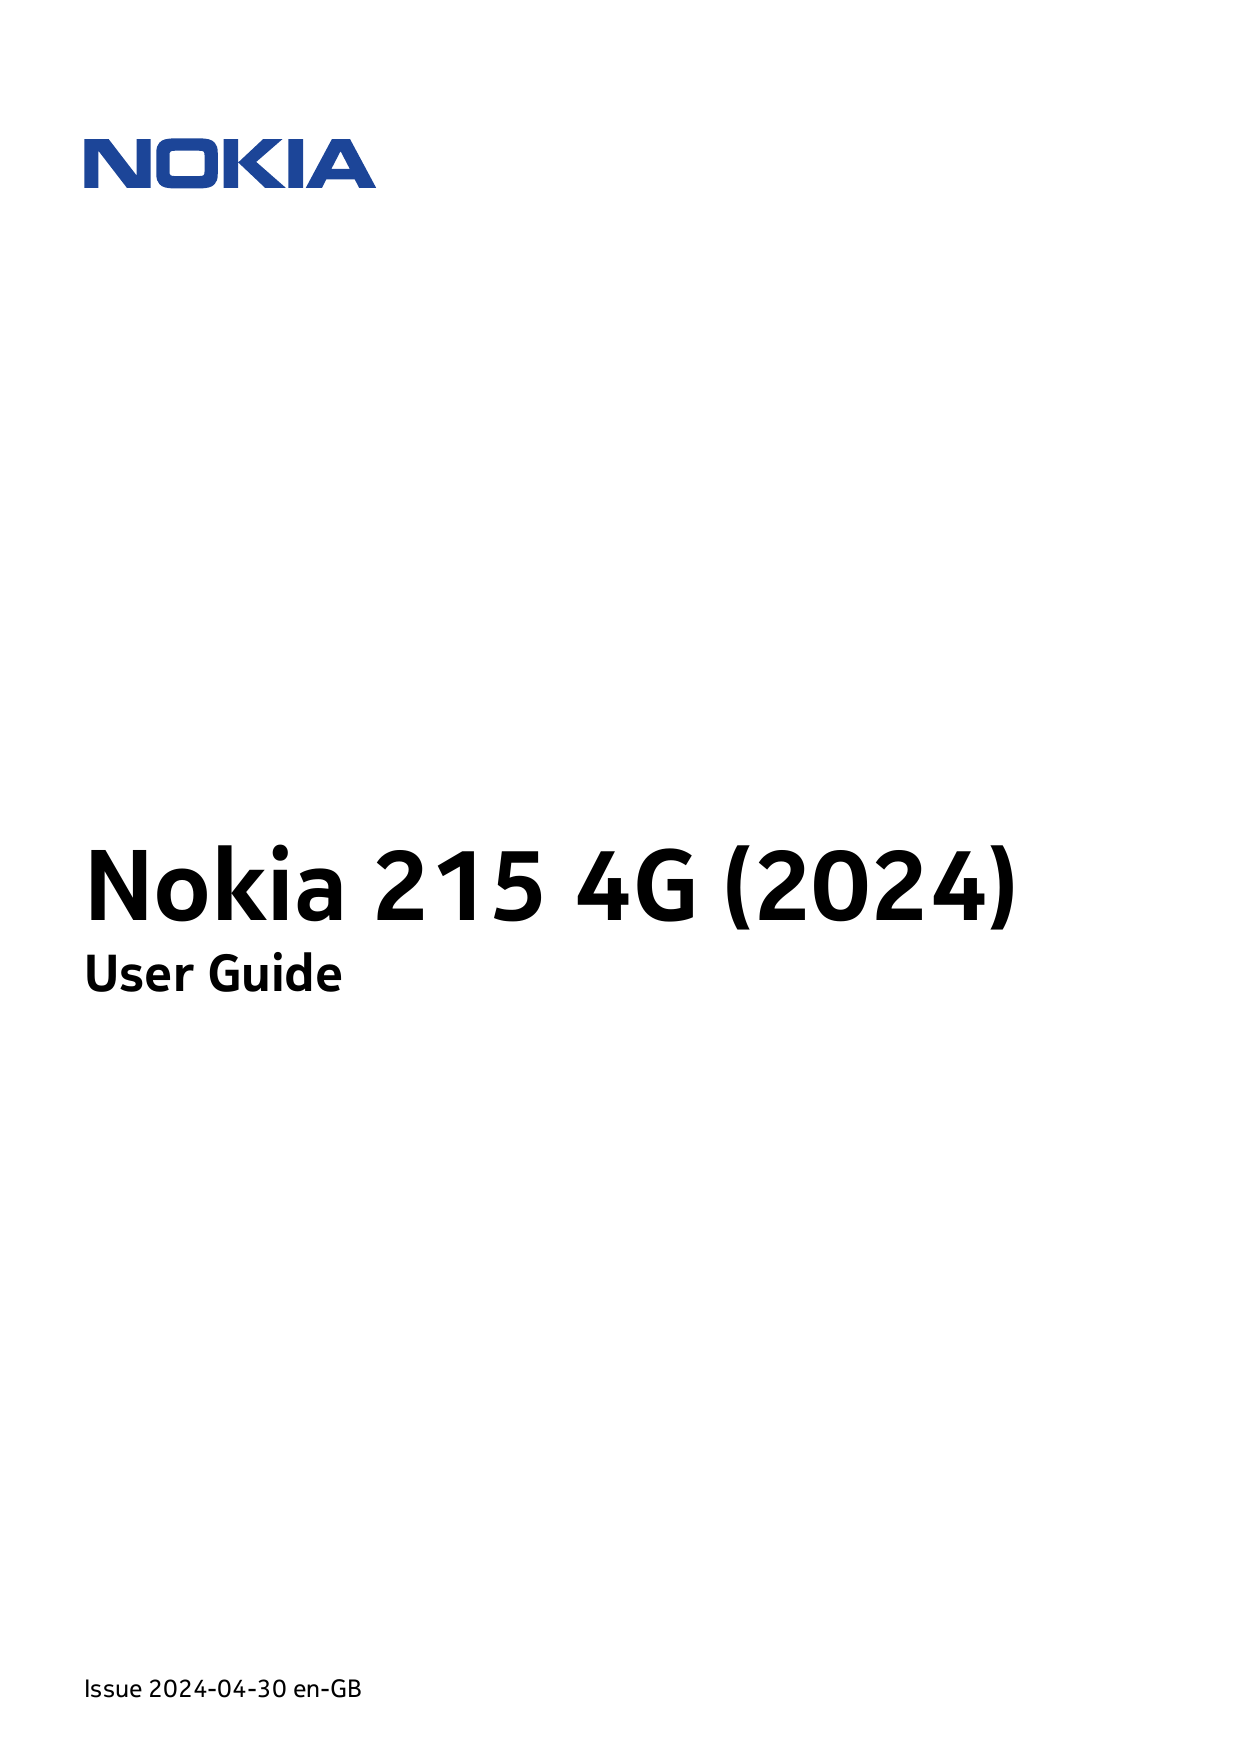 Nokia 215 4G (2024)User GuideIssue 2024-04-30 en-GB